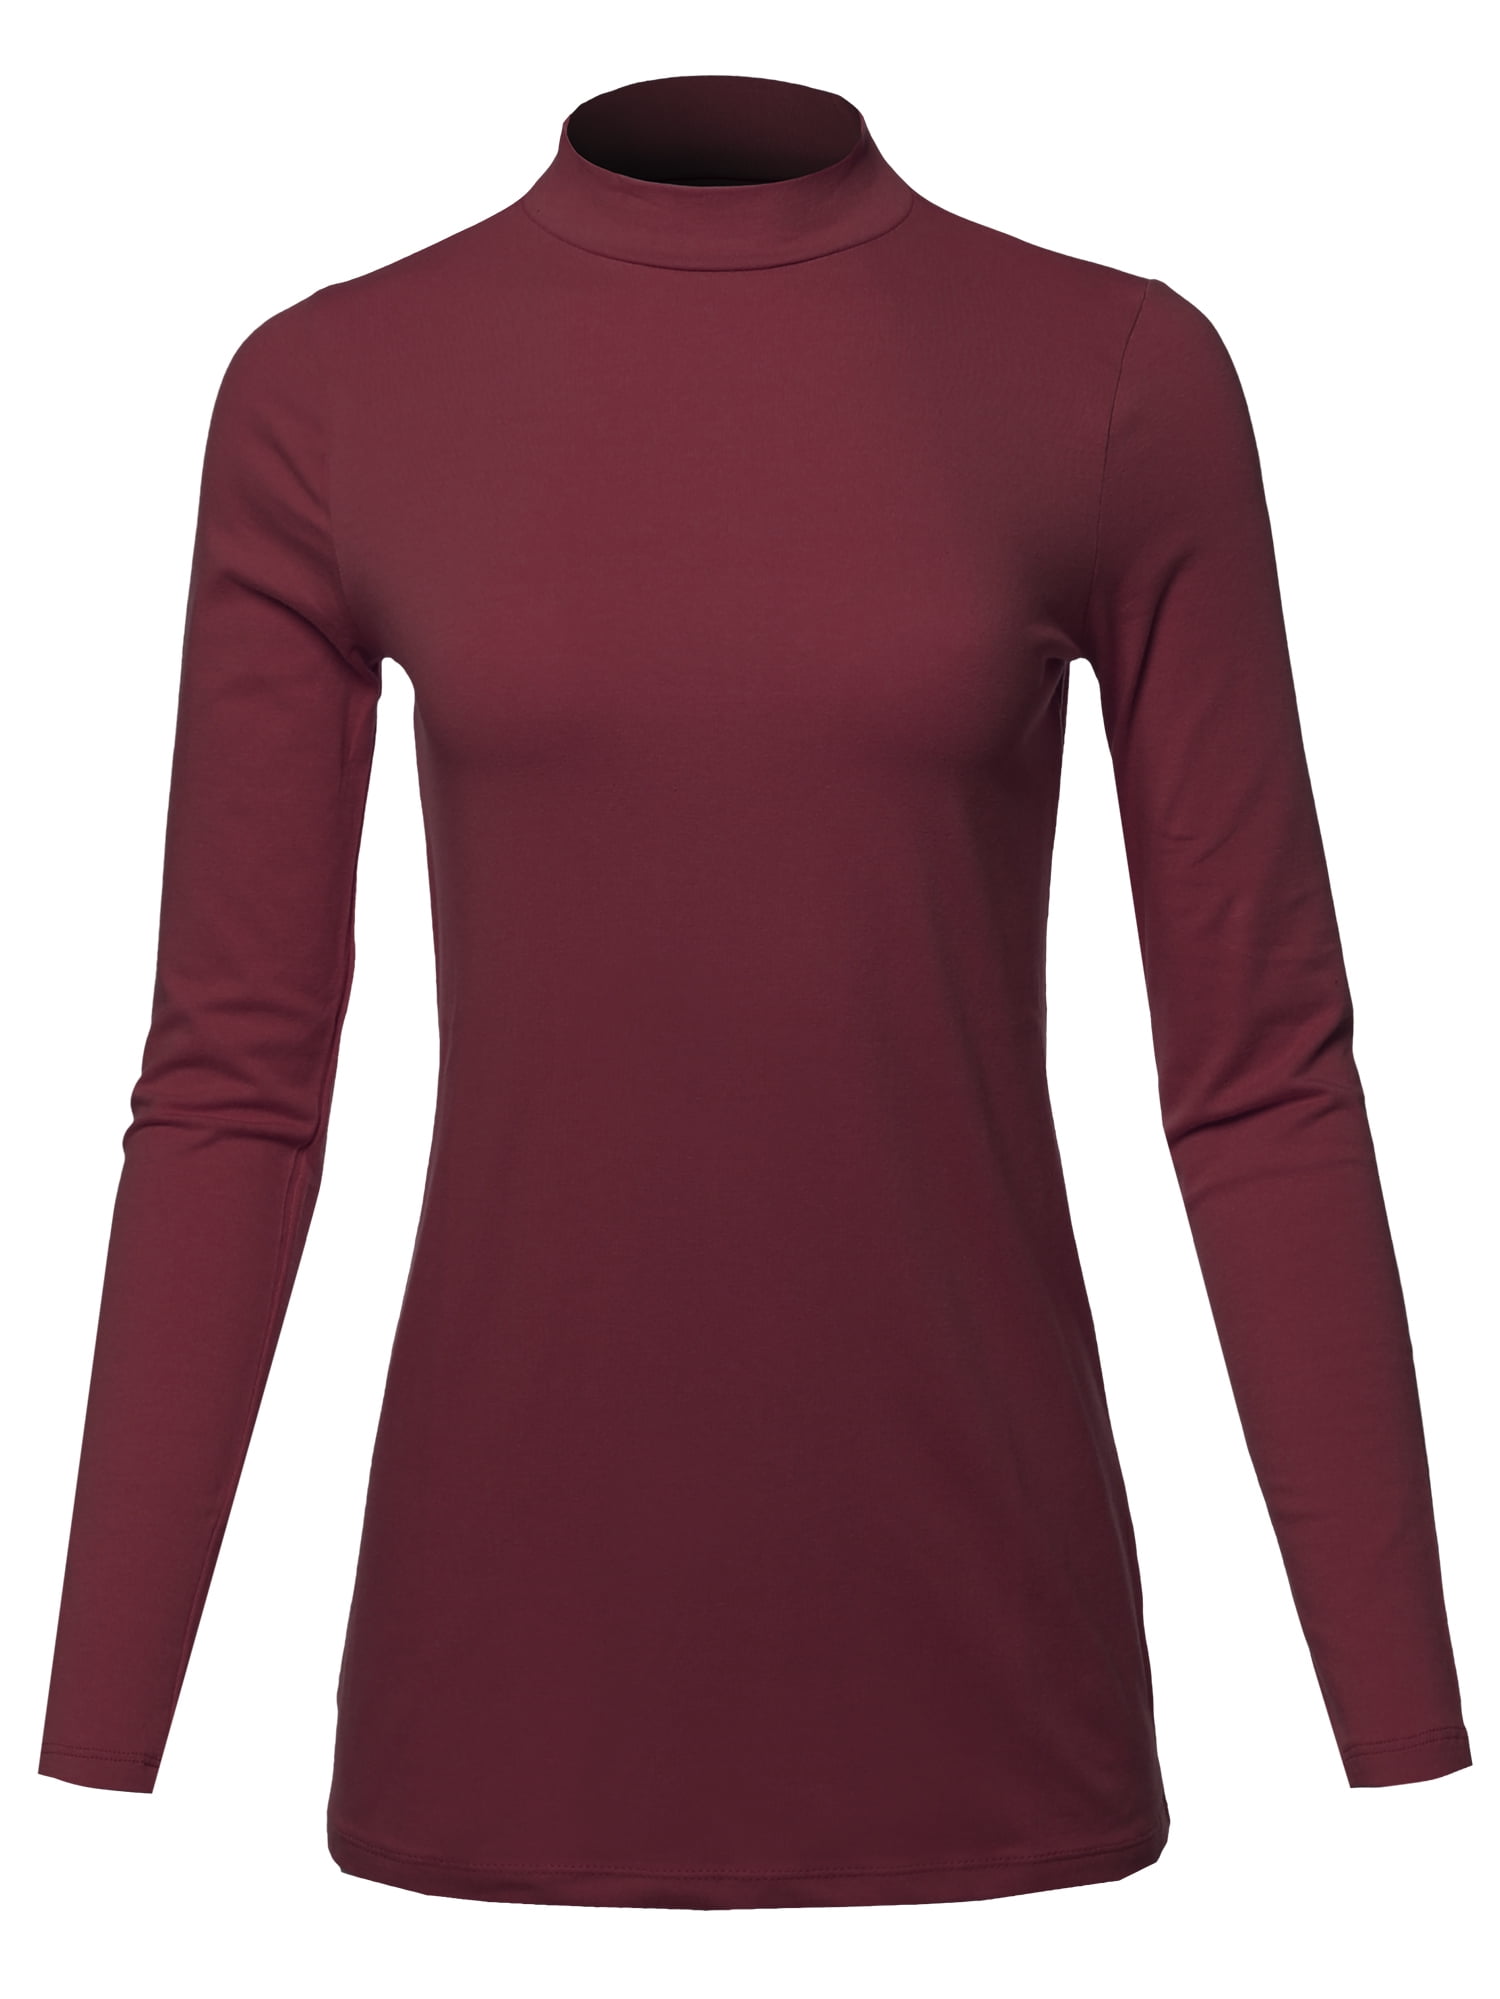 Buy Sinsay women mock neckline long sleeve allover print top maroon Online